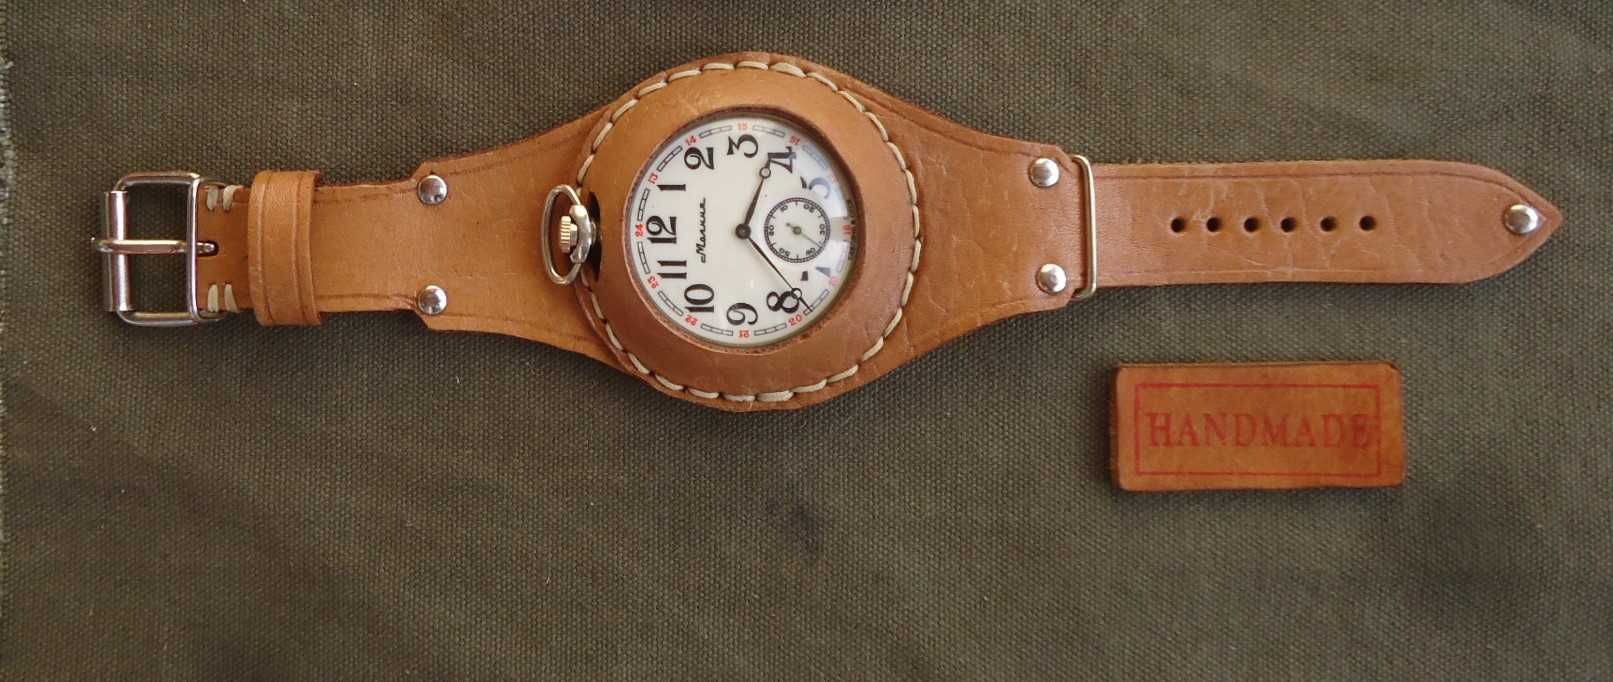 Pasek do zegarka kieszonkowego 50 mm.